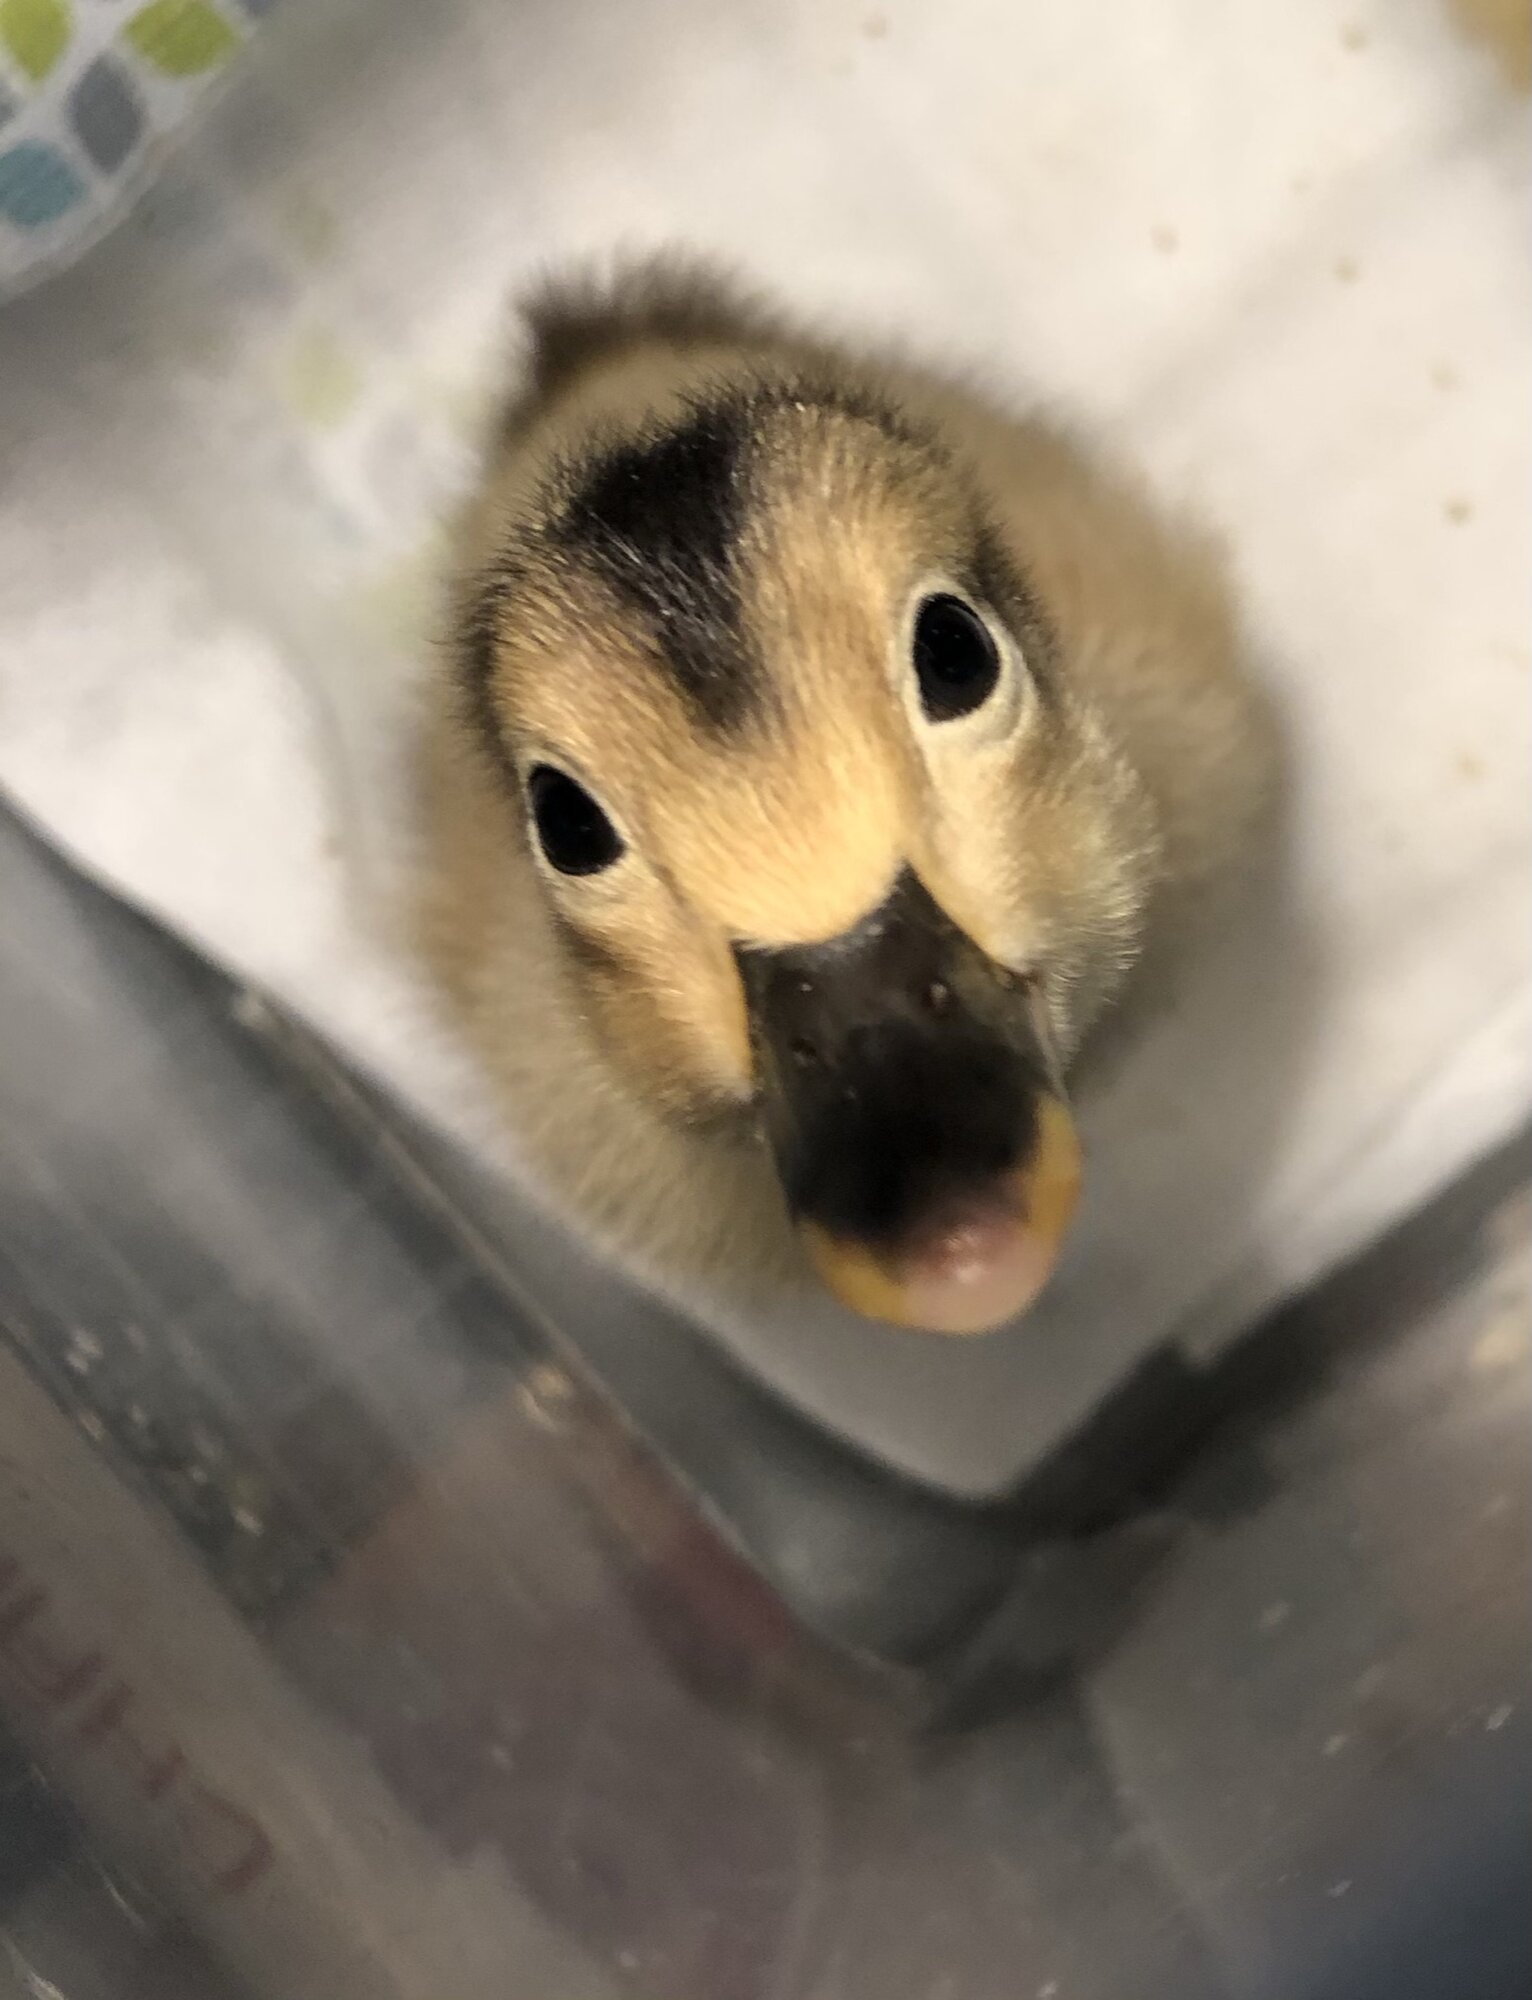 My first duck!